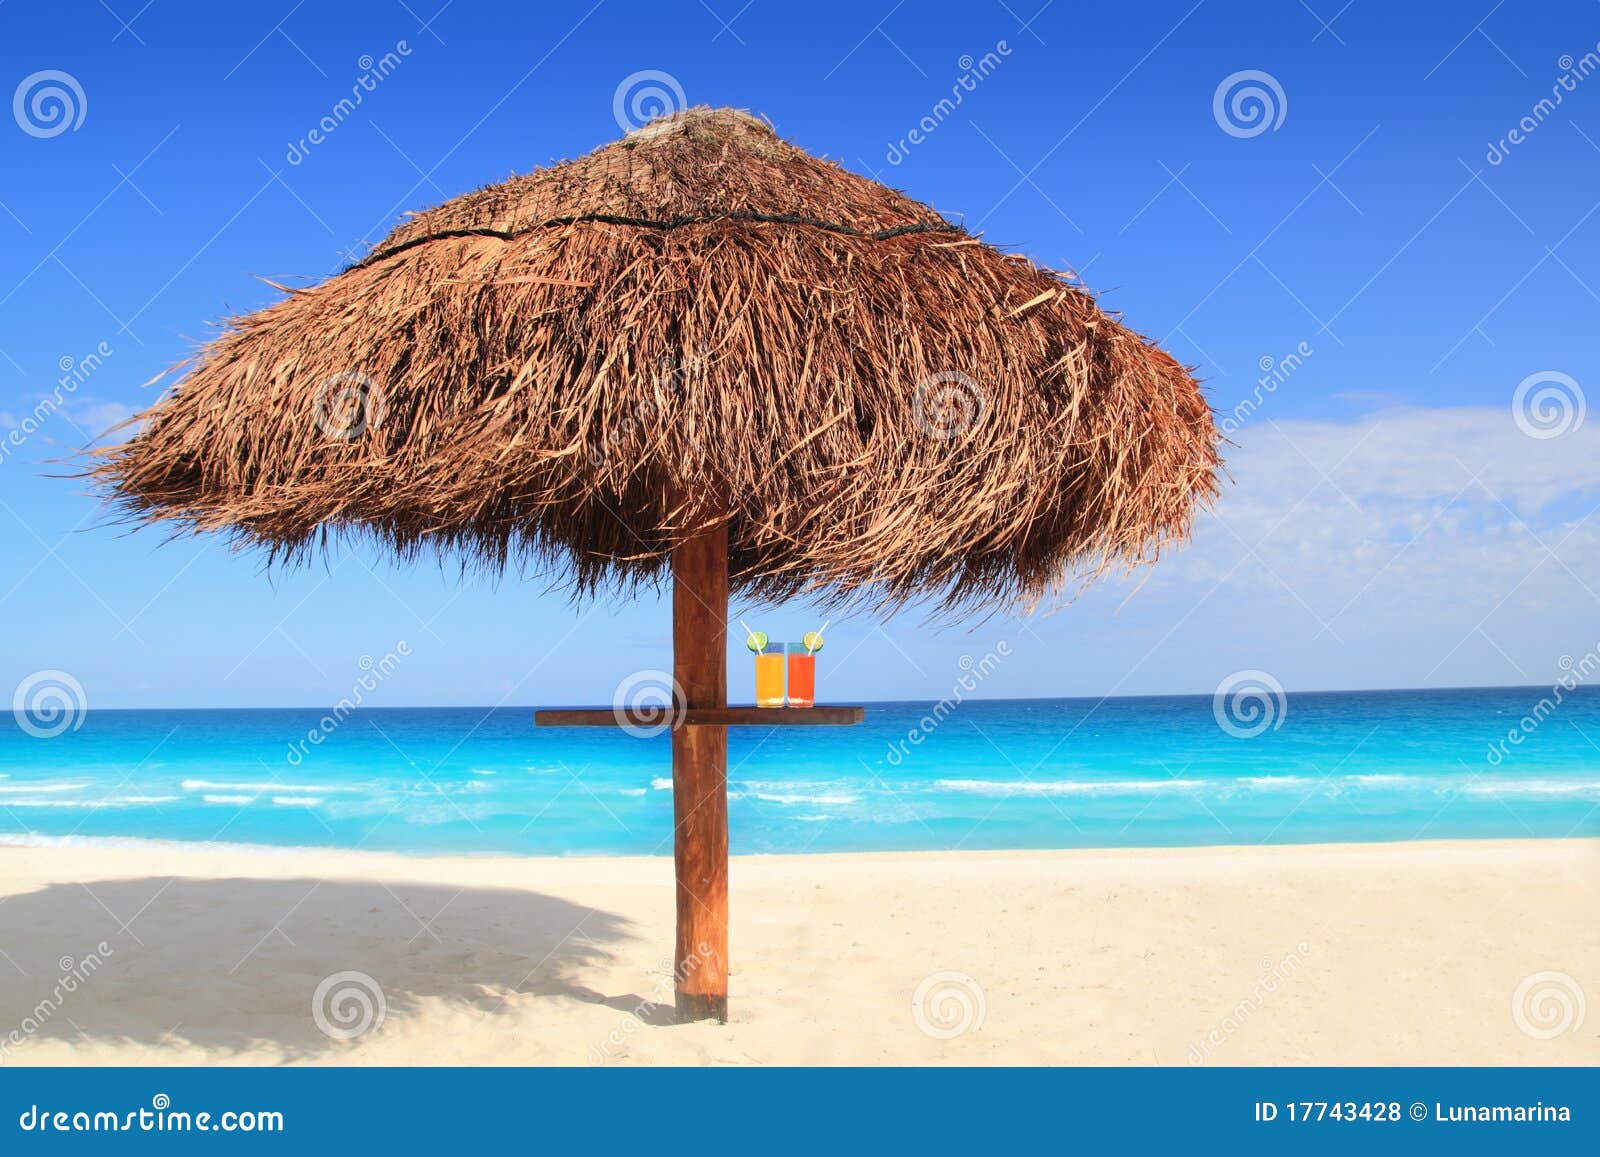 palapa sun roof beach umbrella in caribbean